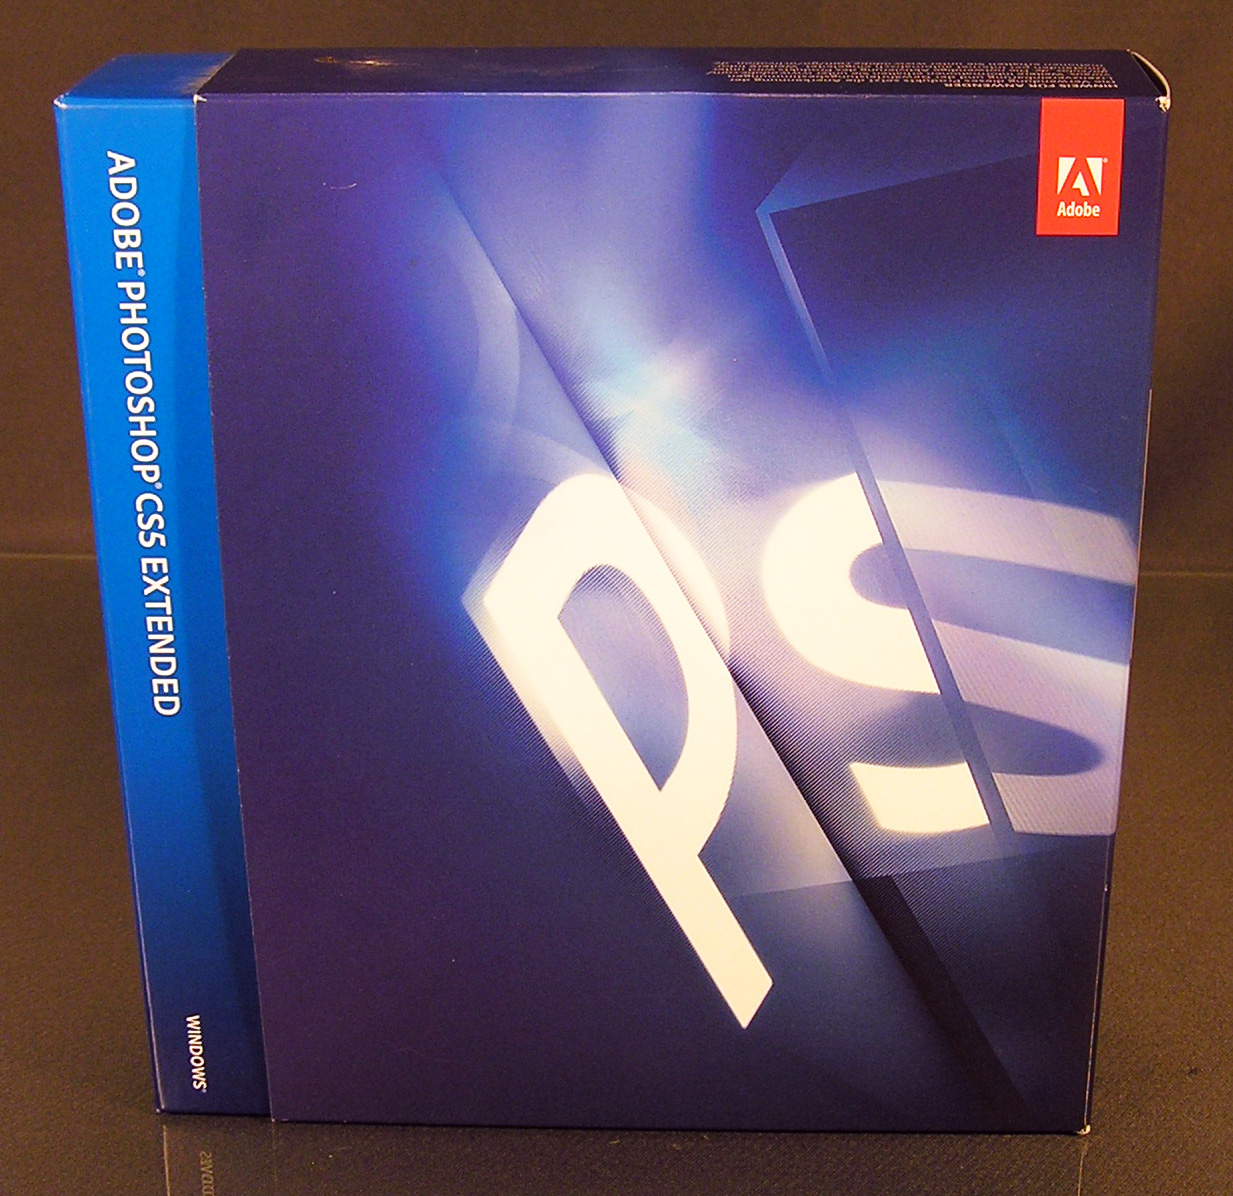 Adobe photoshop upgrade for macbook